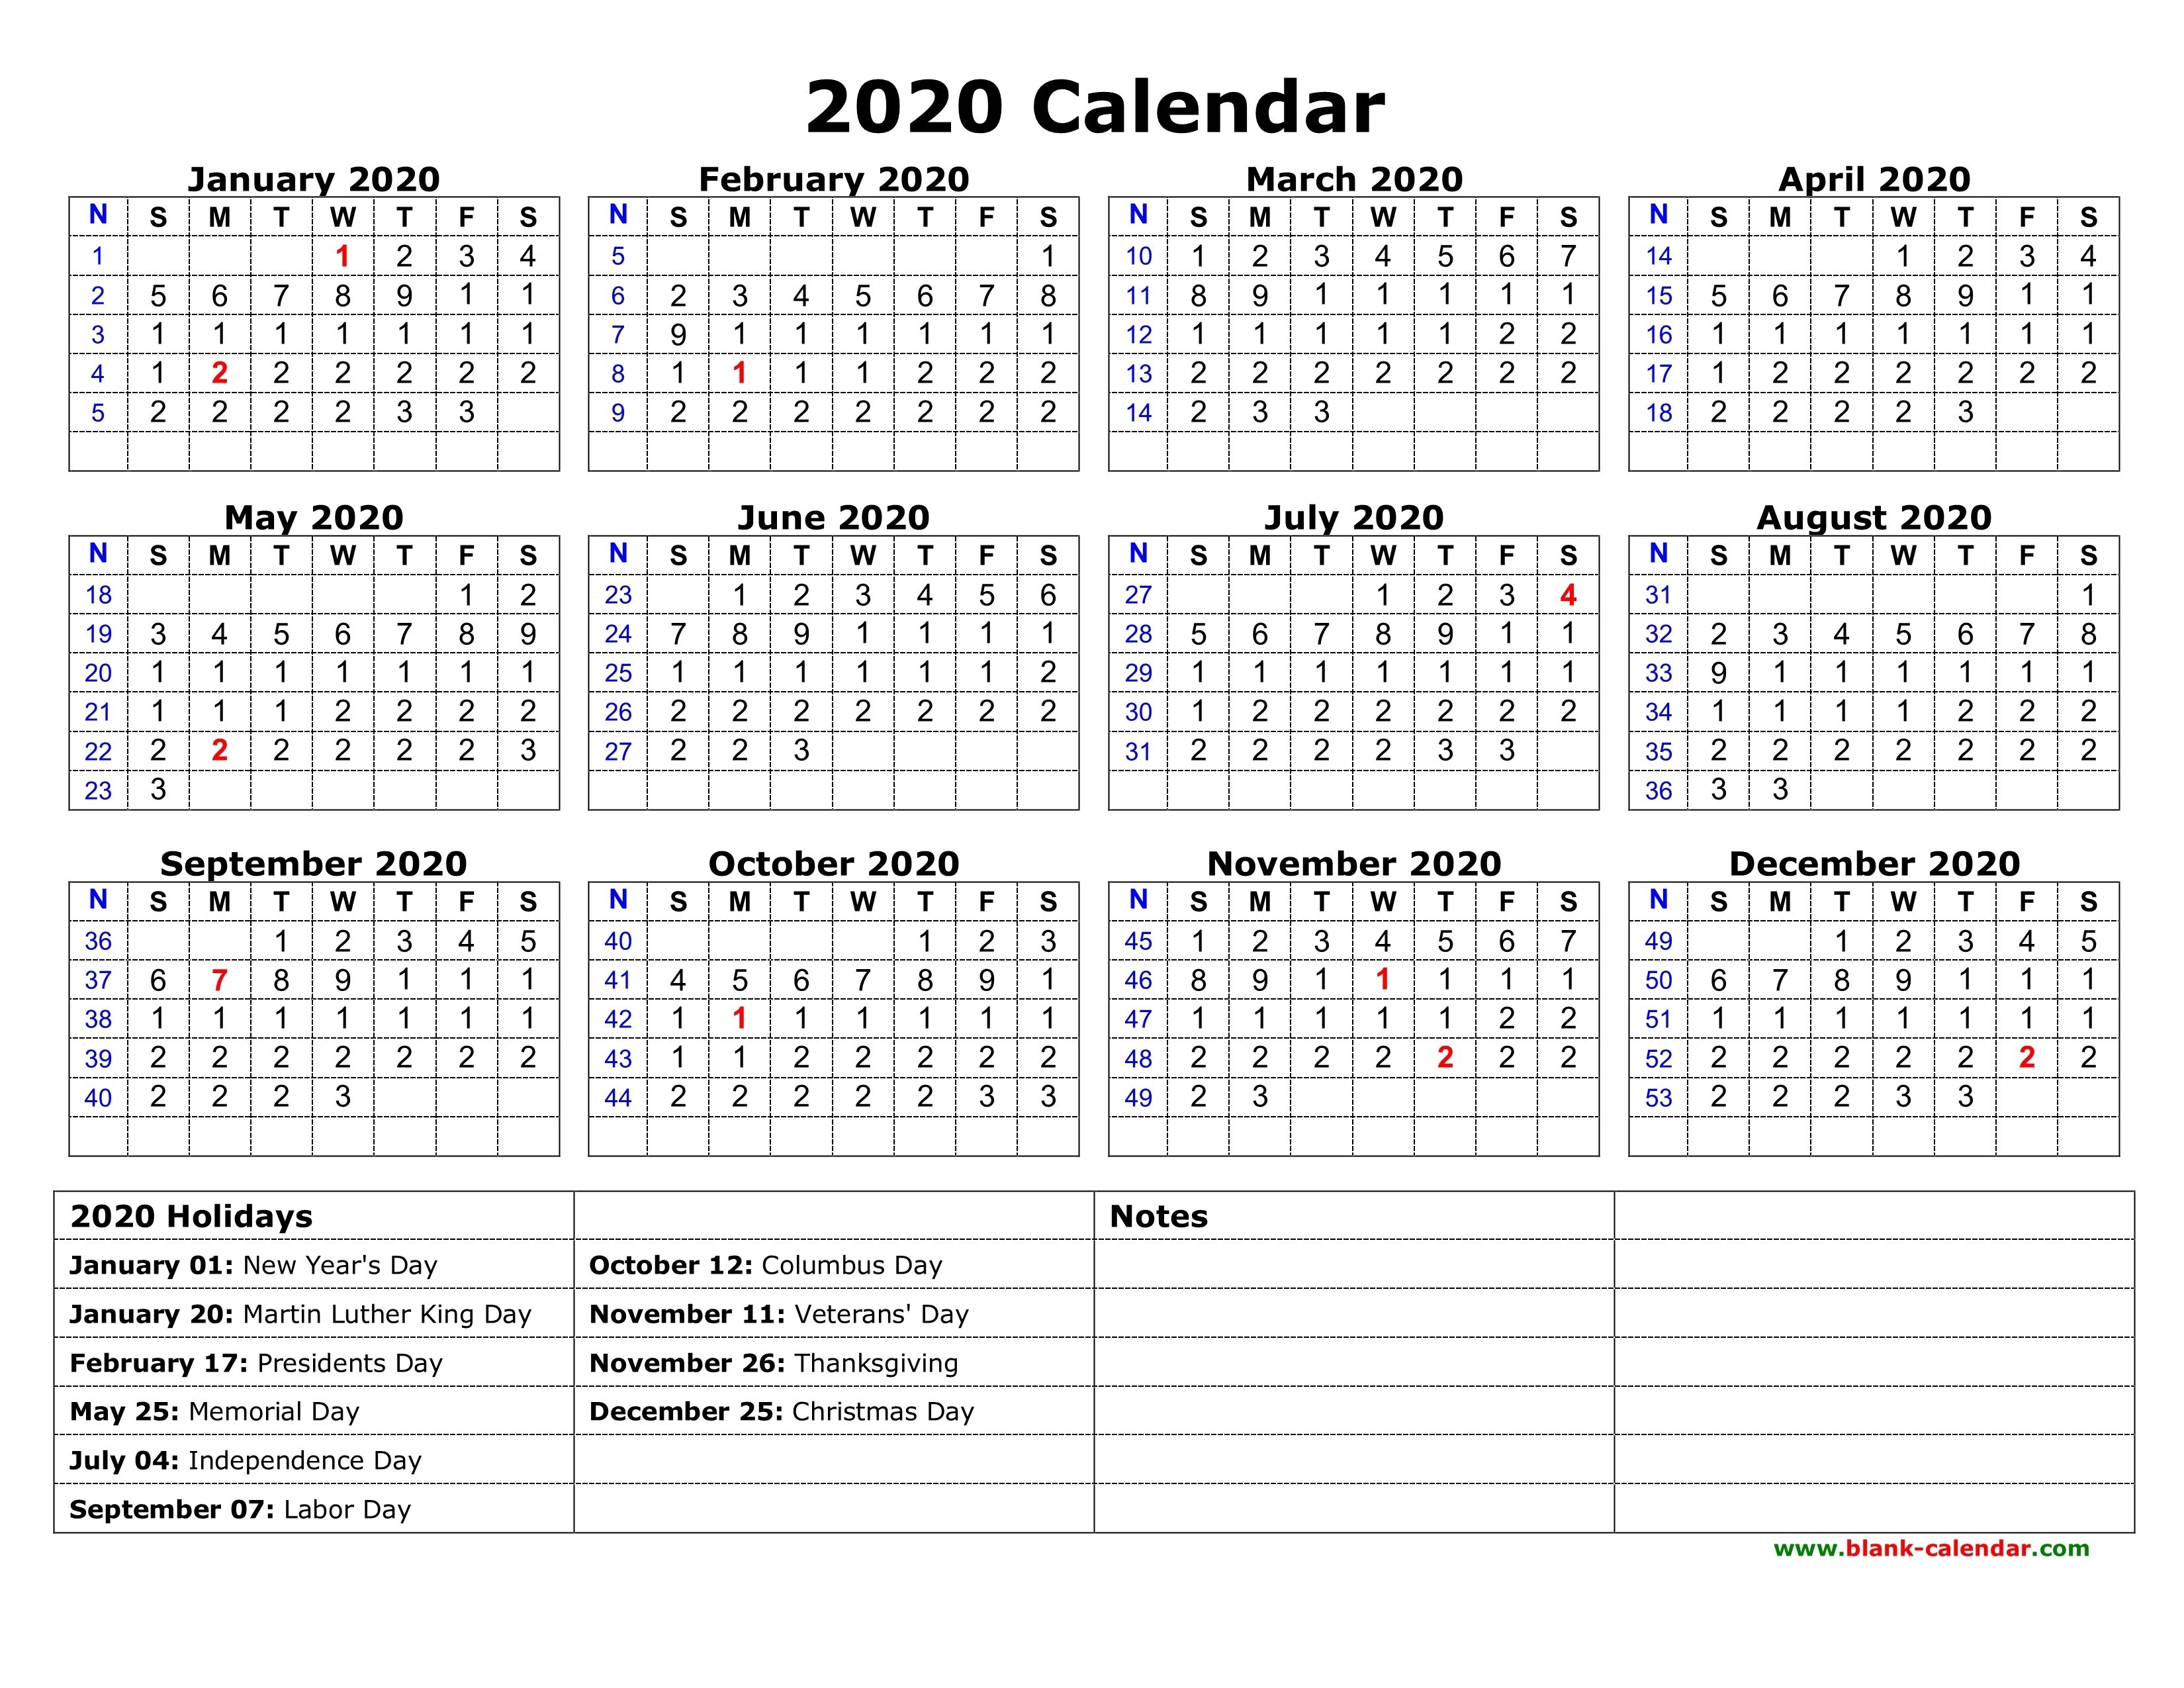 Free Printable 2020 Calendar With Holidays 2 - Crearphpnuke-2020 Calendare With Holidays By Vertex42.com